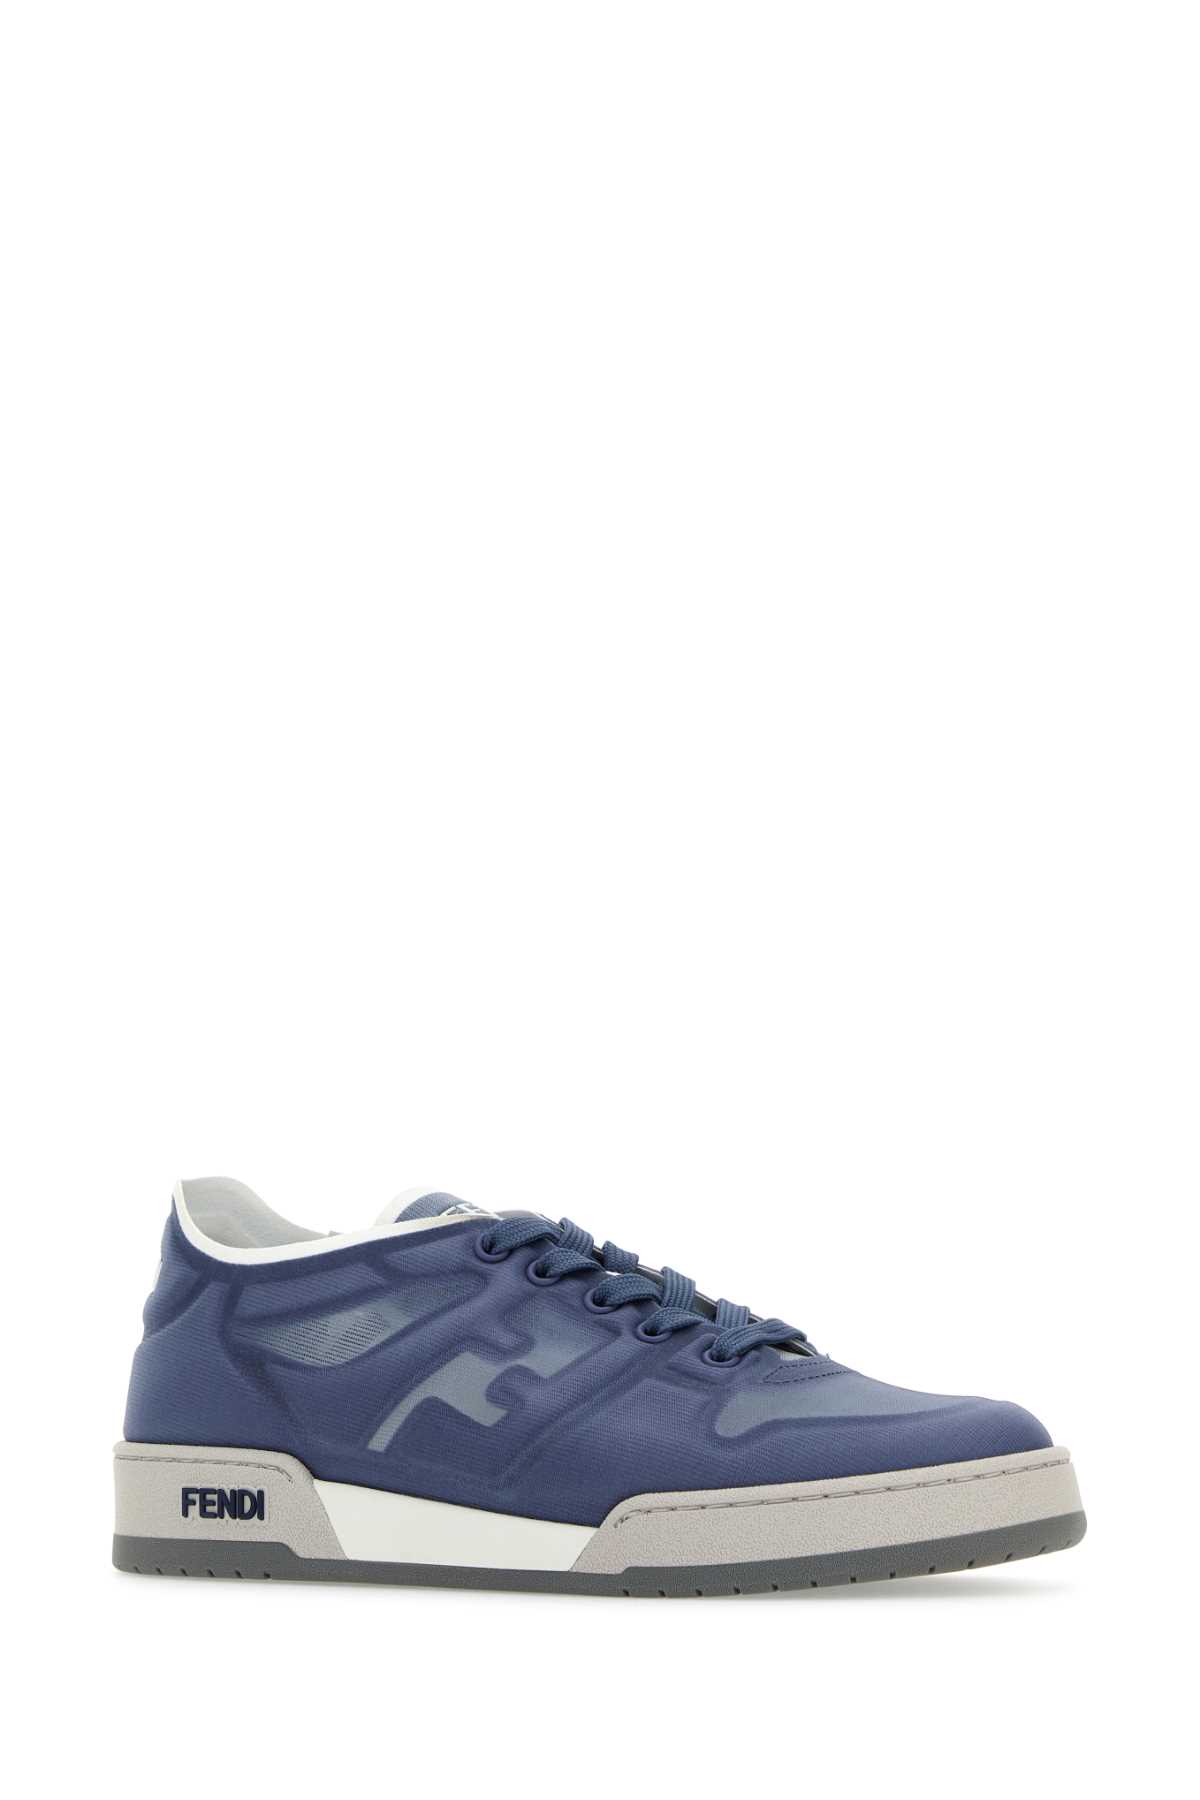 Fendi Air Force Blue Mesh  Match Sneakers In Perfectbianco